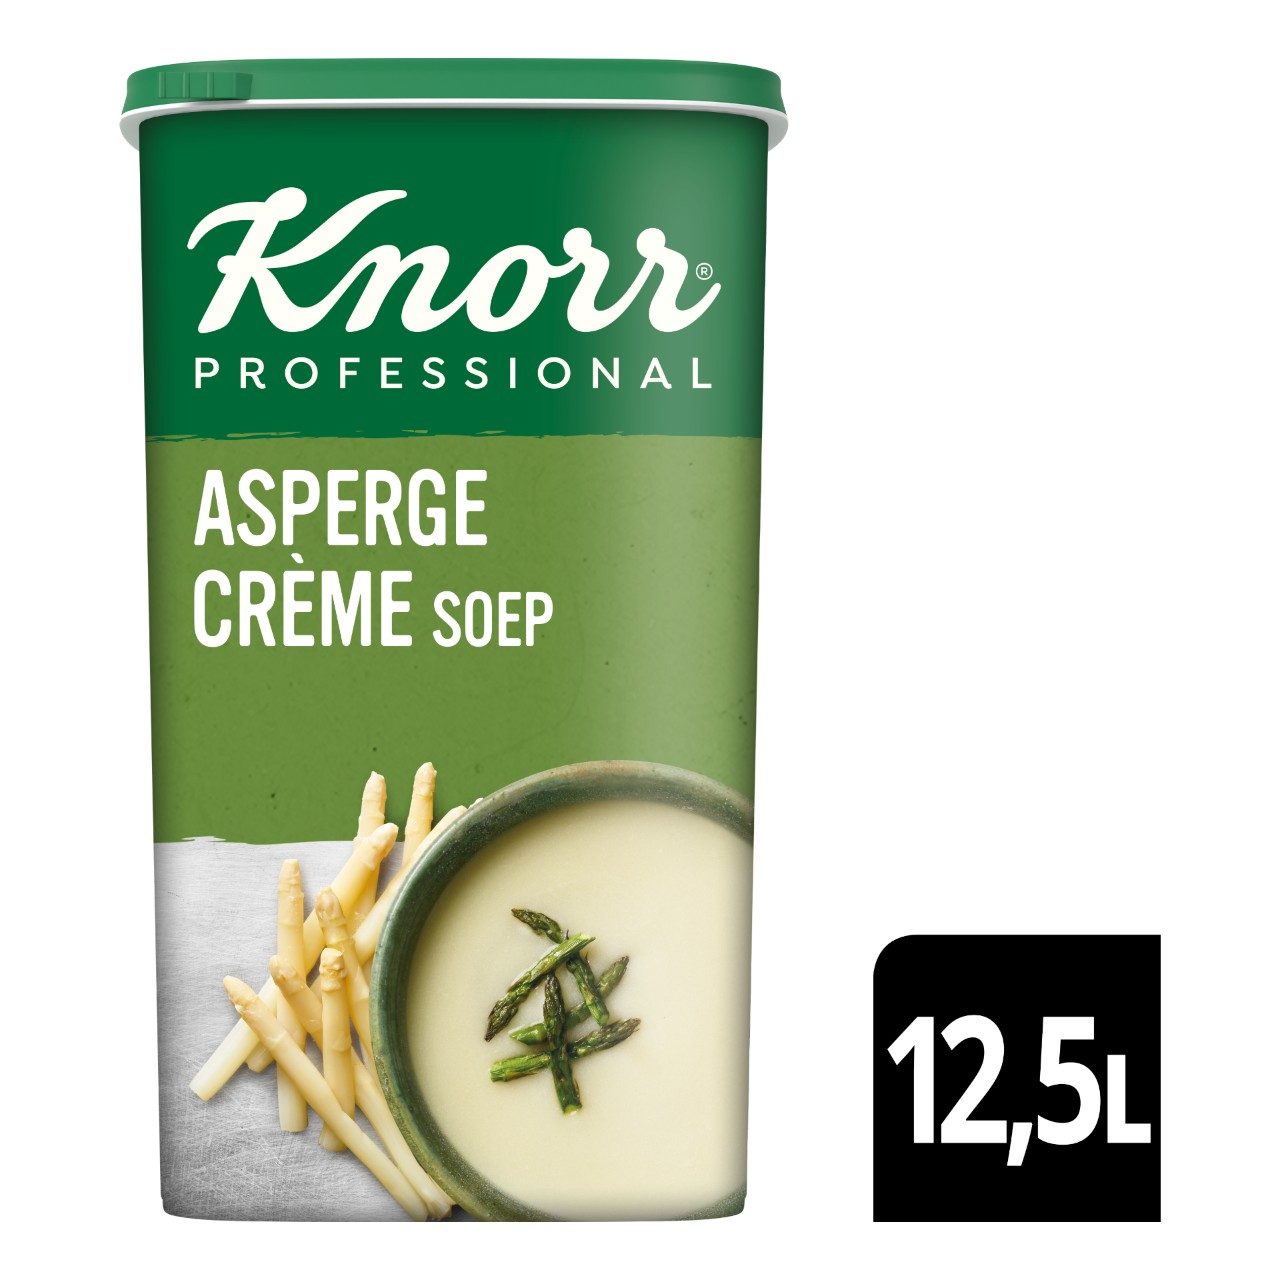 Asperge crèmesoep poeder, opbrengst 12,5l